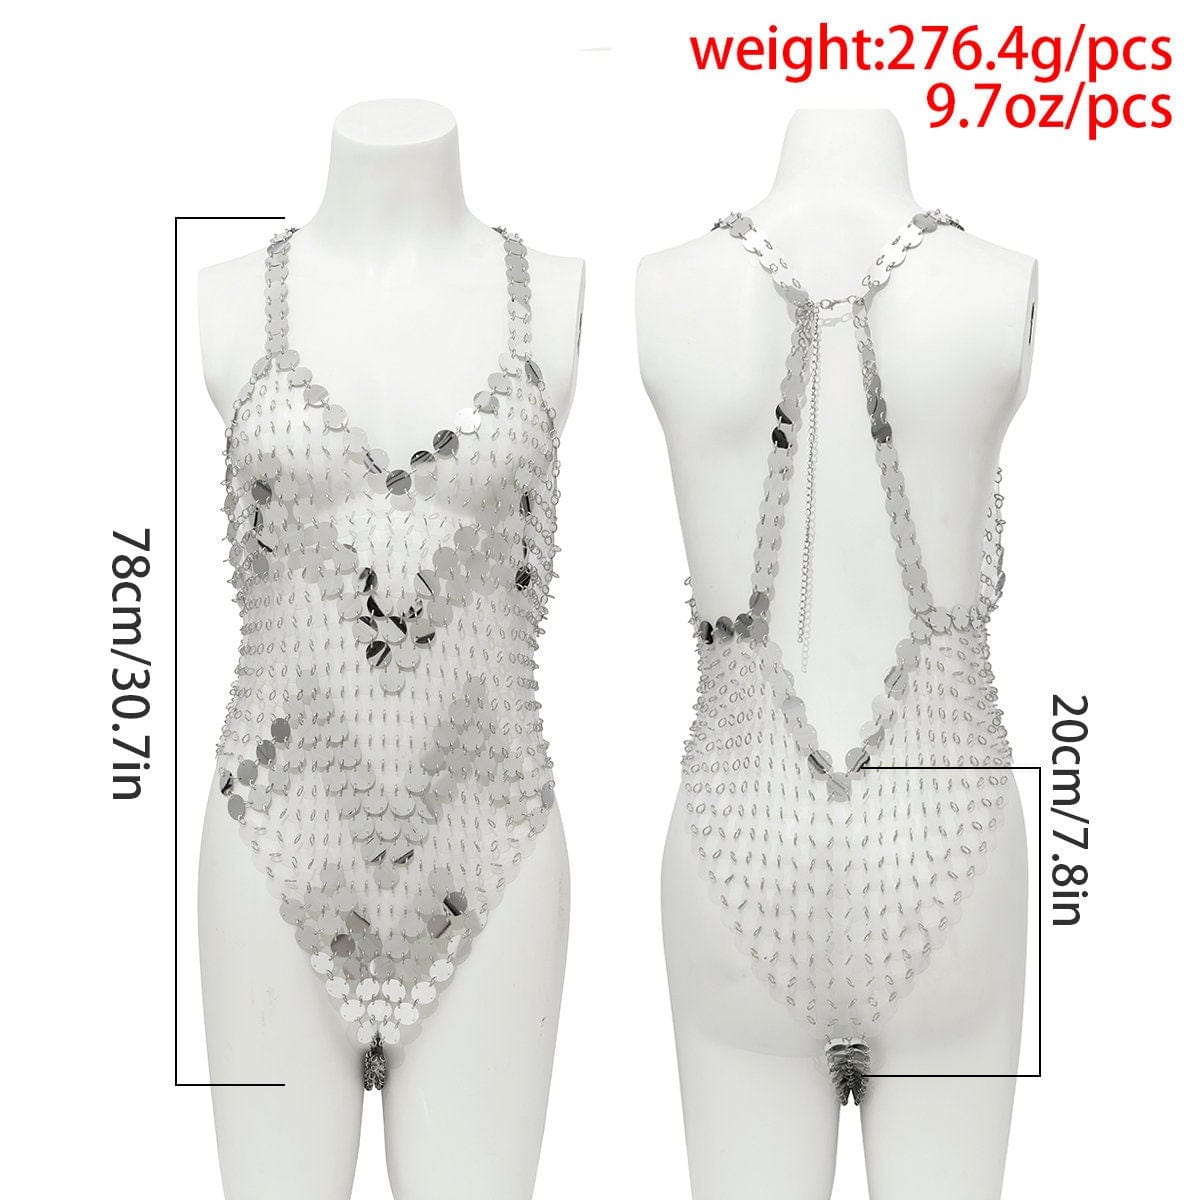 Handmade Transparent Squamous Bikini Sequin Dress